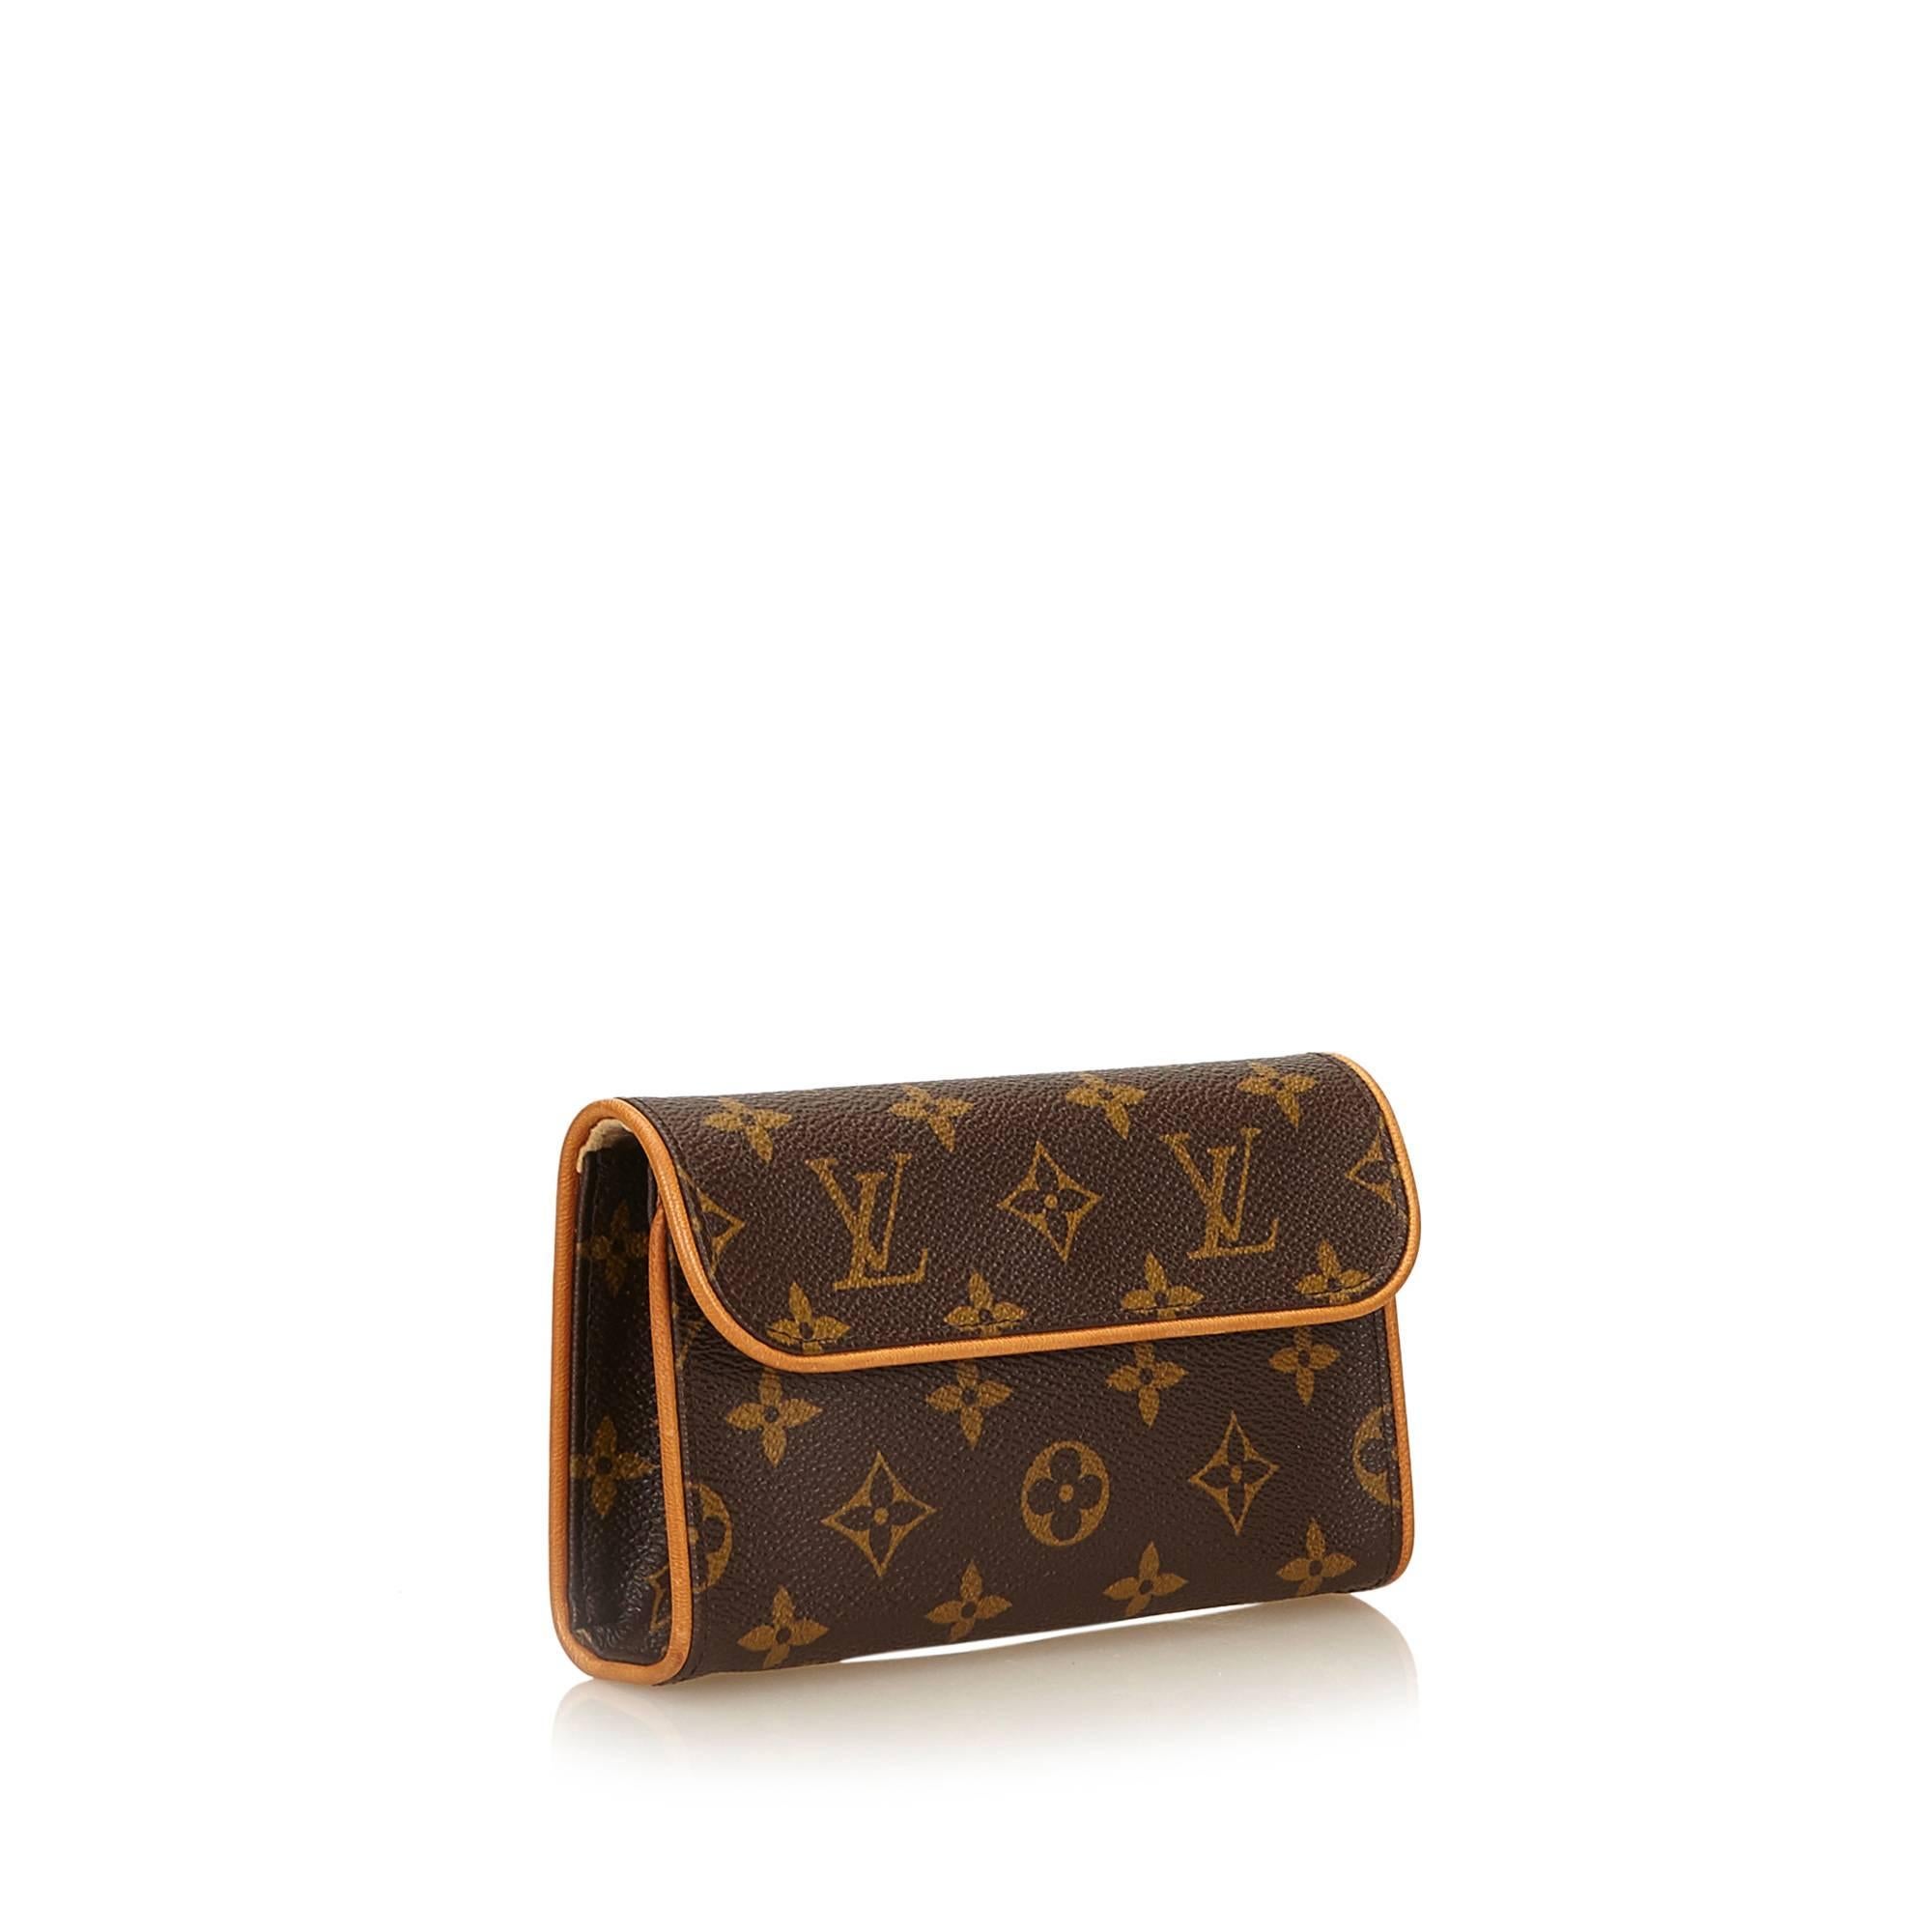 Product details:  Brown monogram canvas Pochette Florentine belt bag by Louis Vuitton.  Detachable, adjustable leather waist strap.  Front flap with magnetic snap closure.  Lined interior.  Goldtone hardware.  6.3